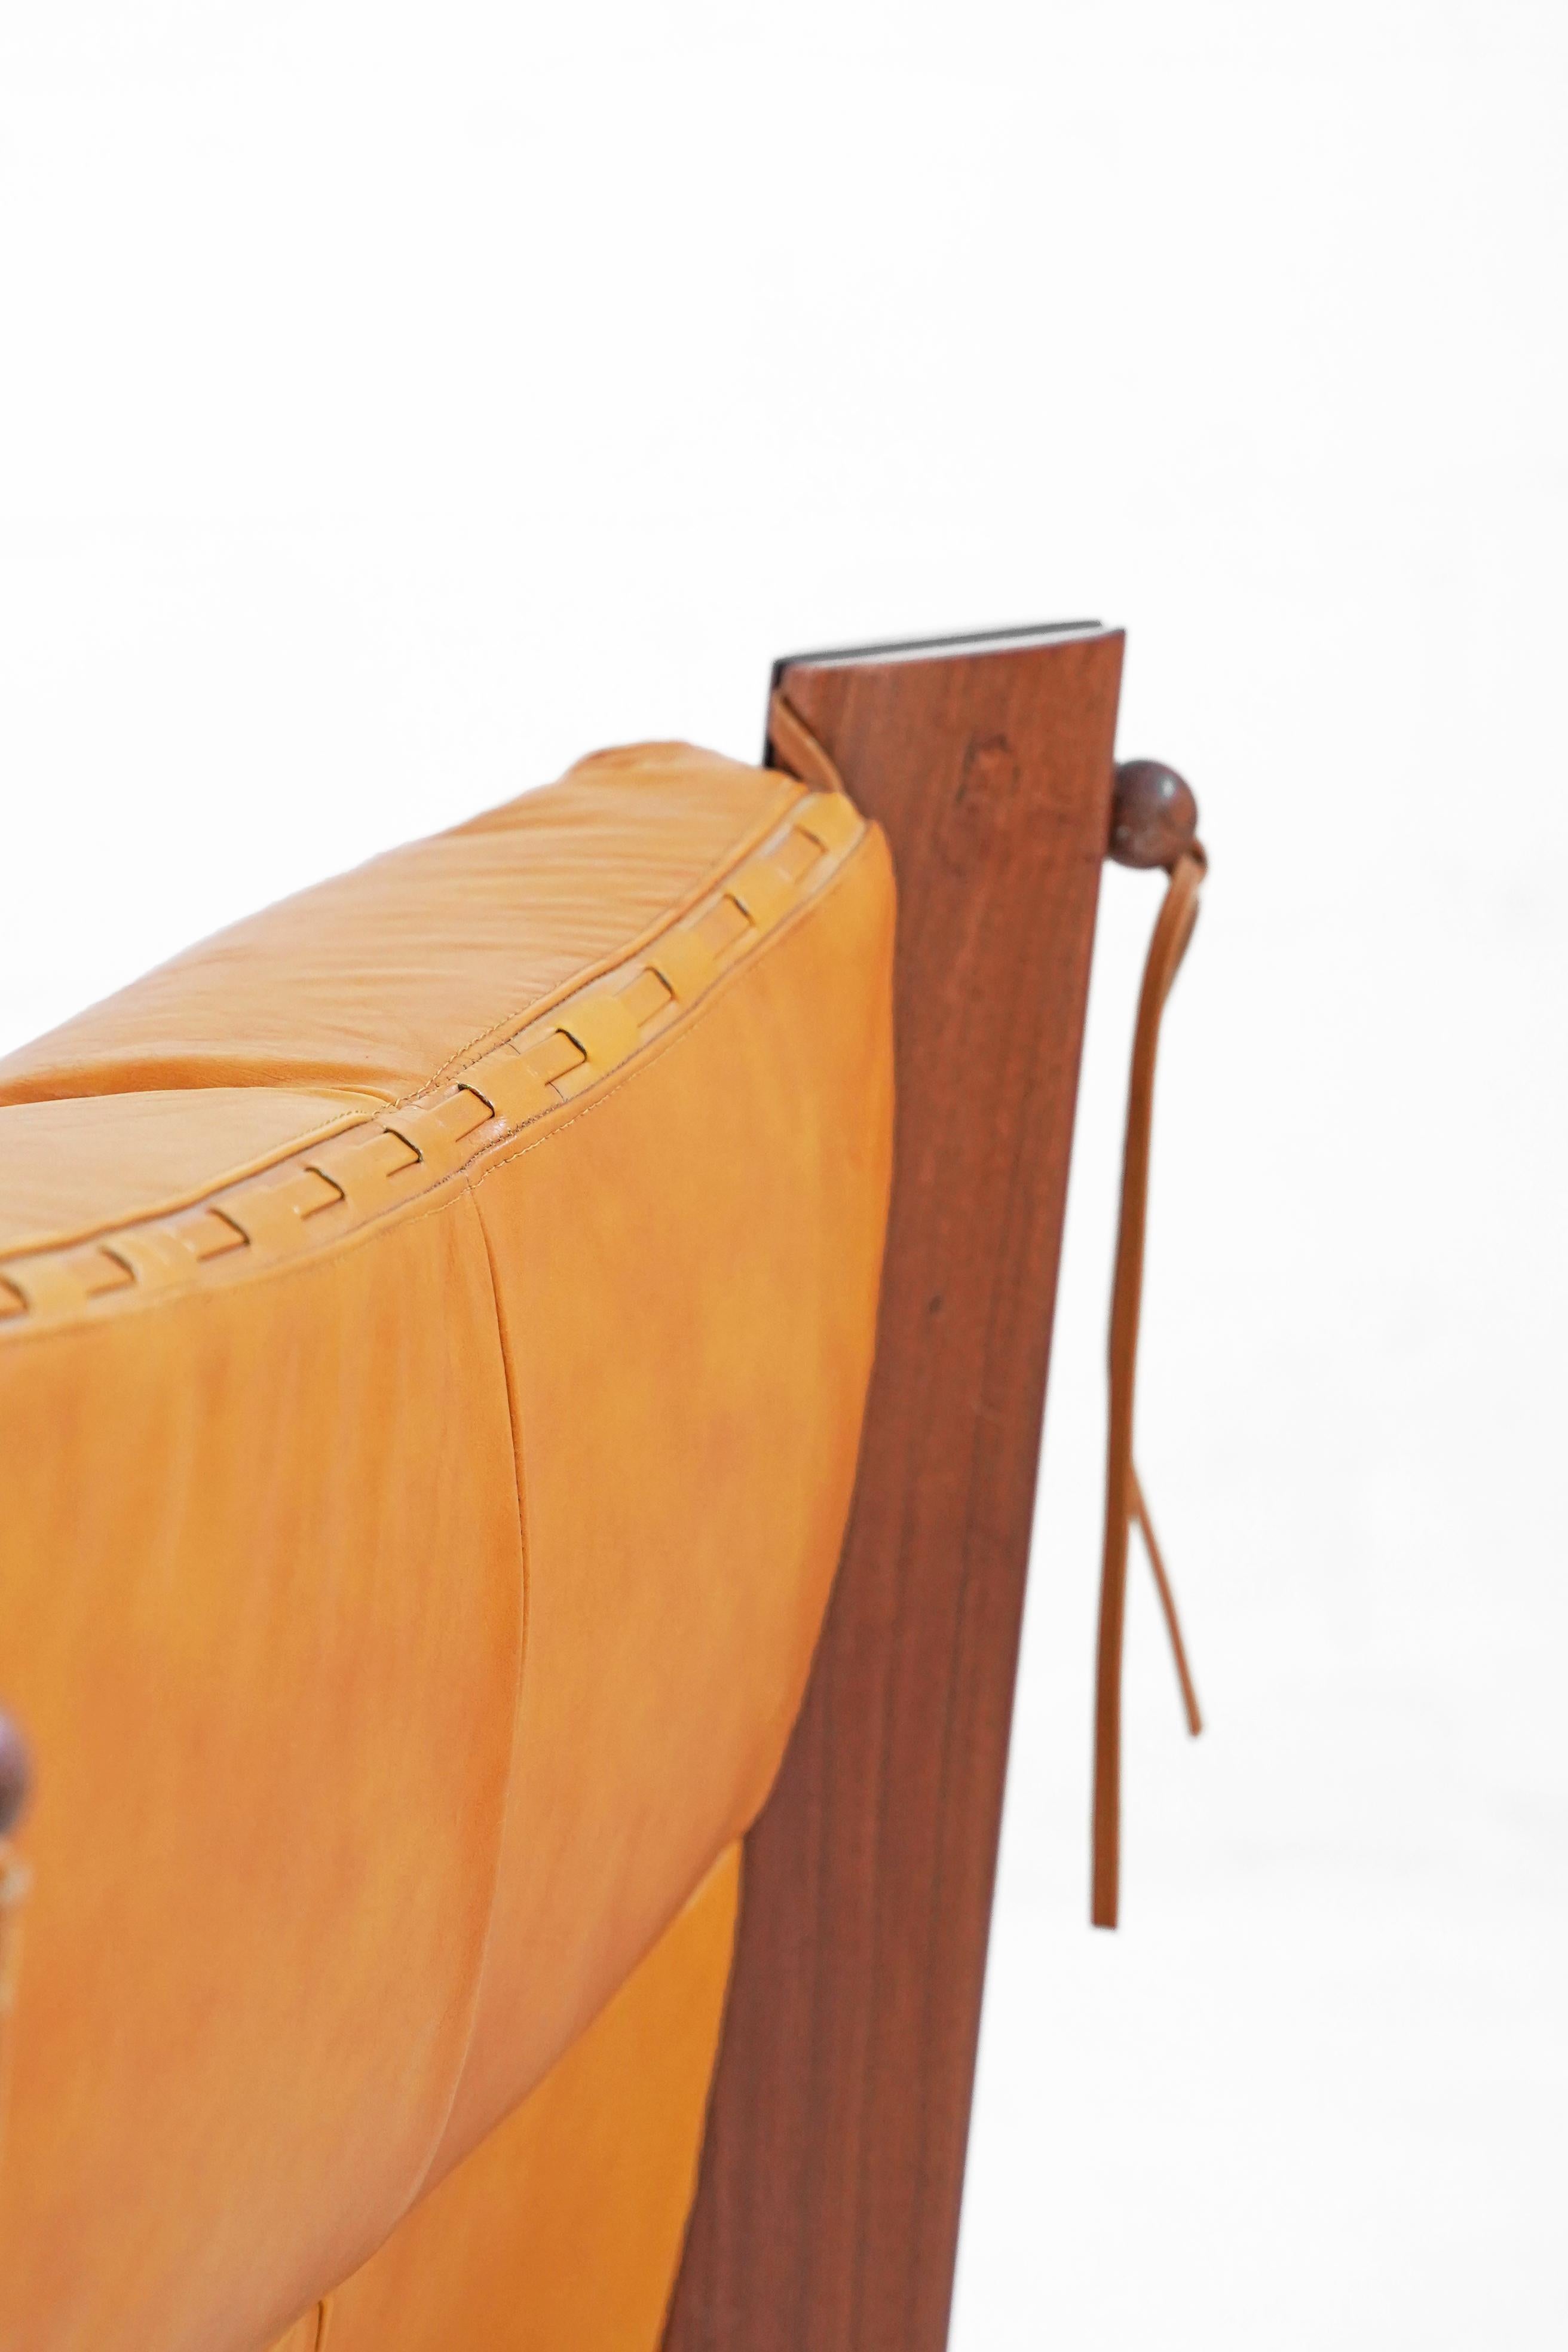 MP-211 Lounge Chair by Brazilian Designer Percival Lafer for Móveis Lafer 6